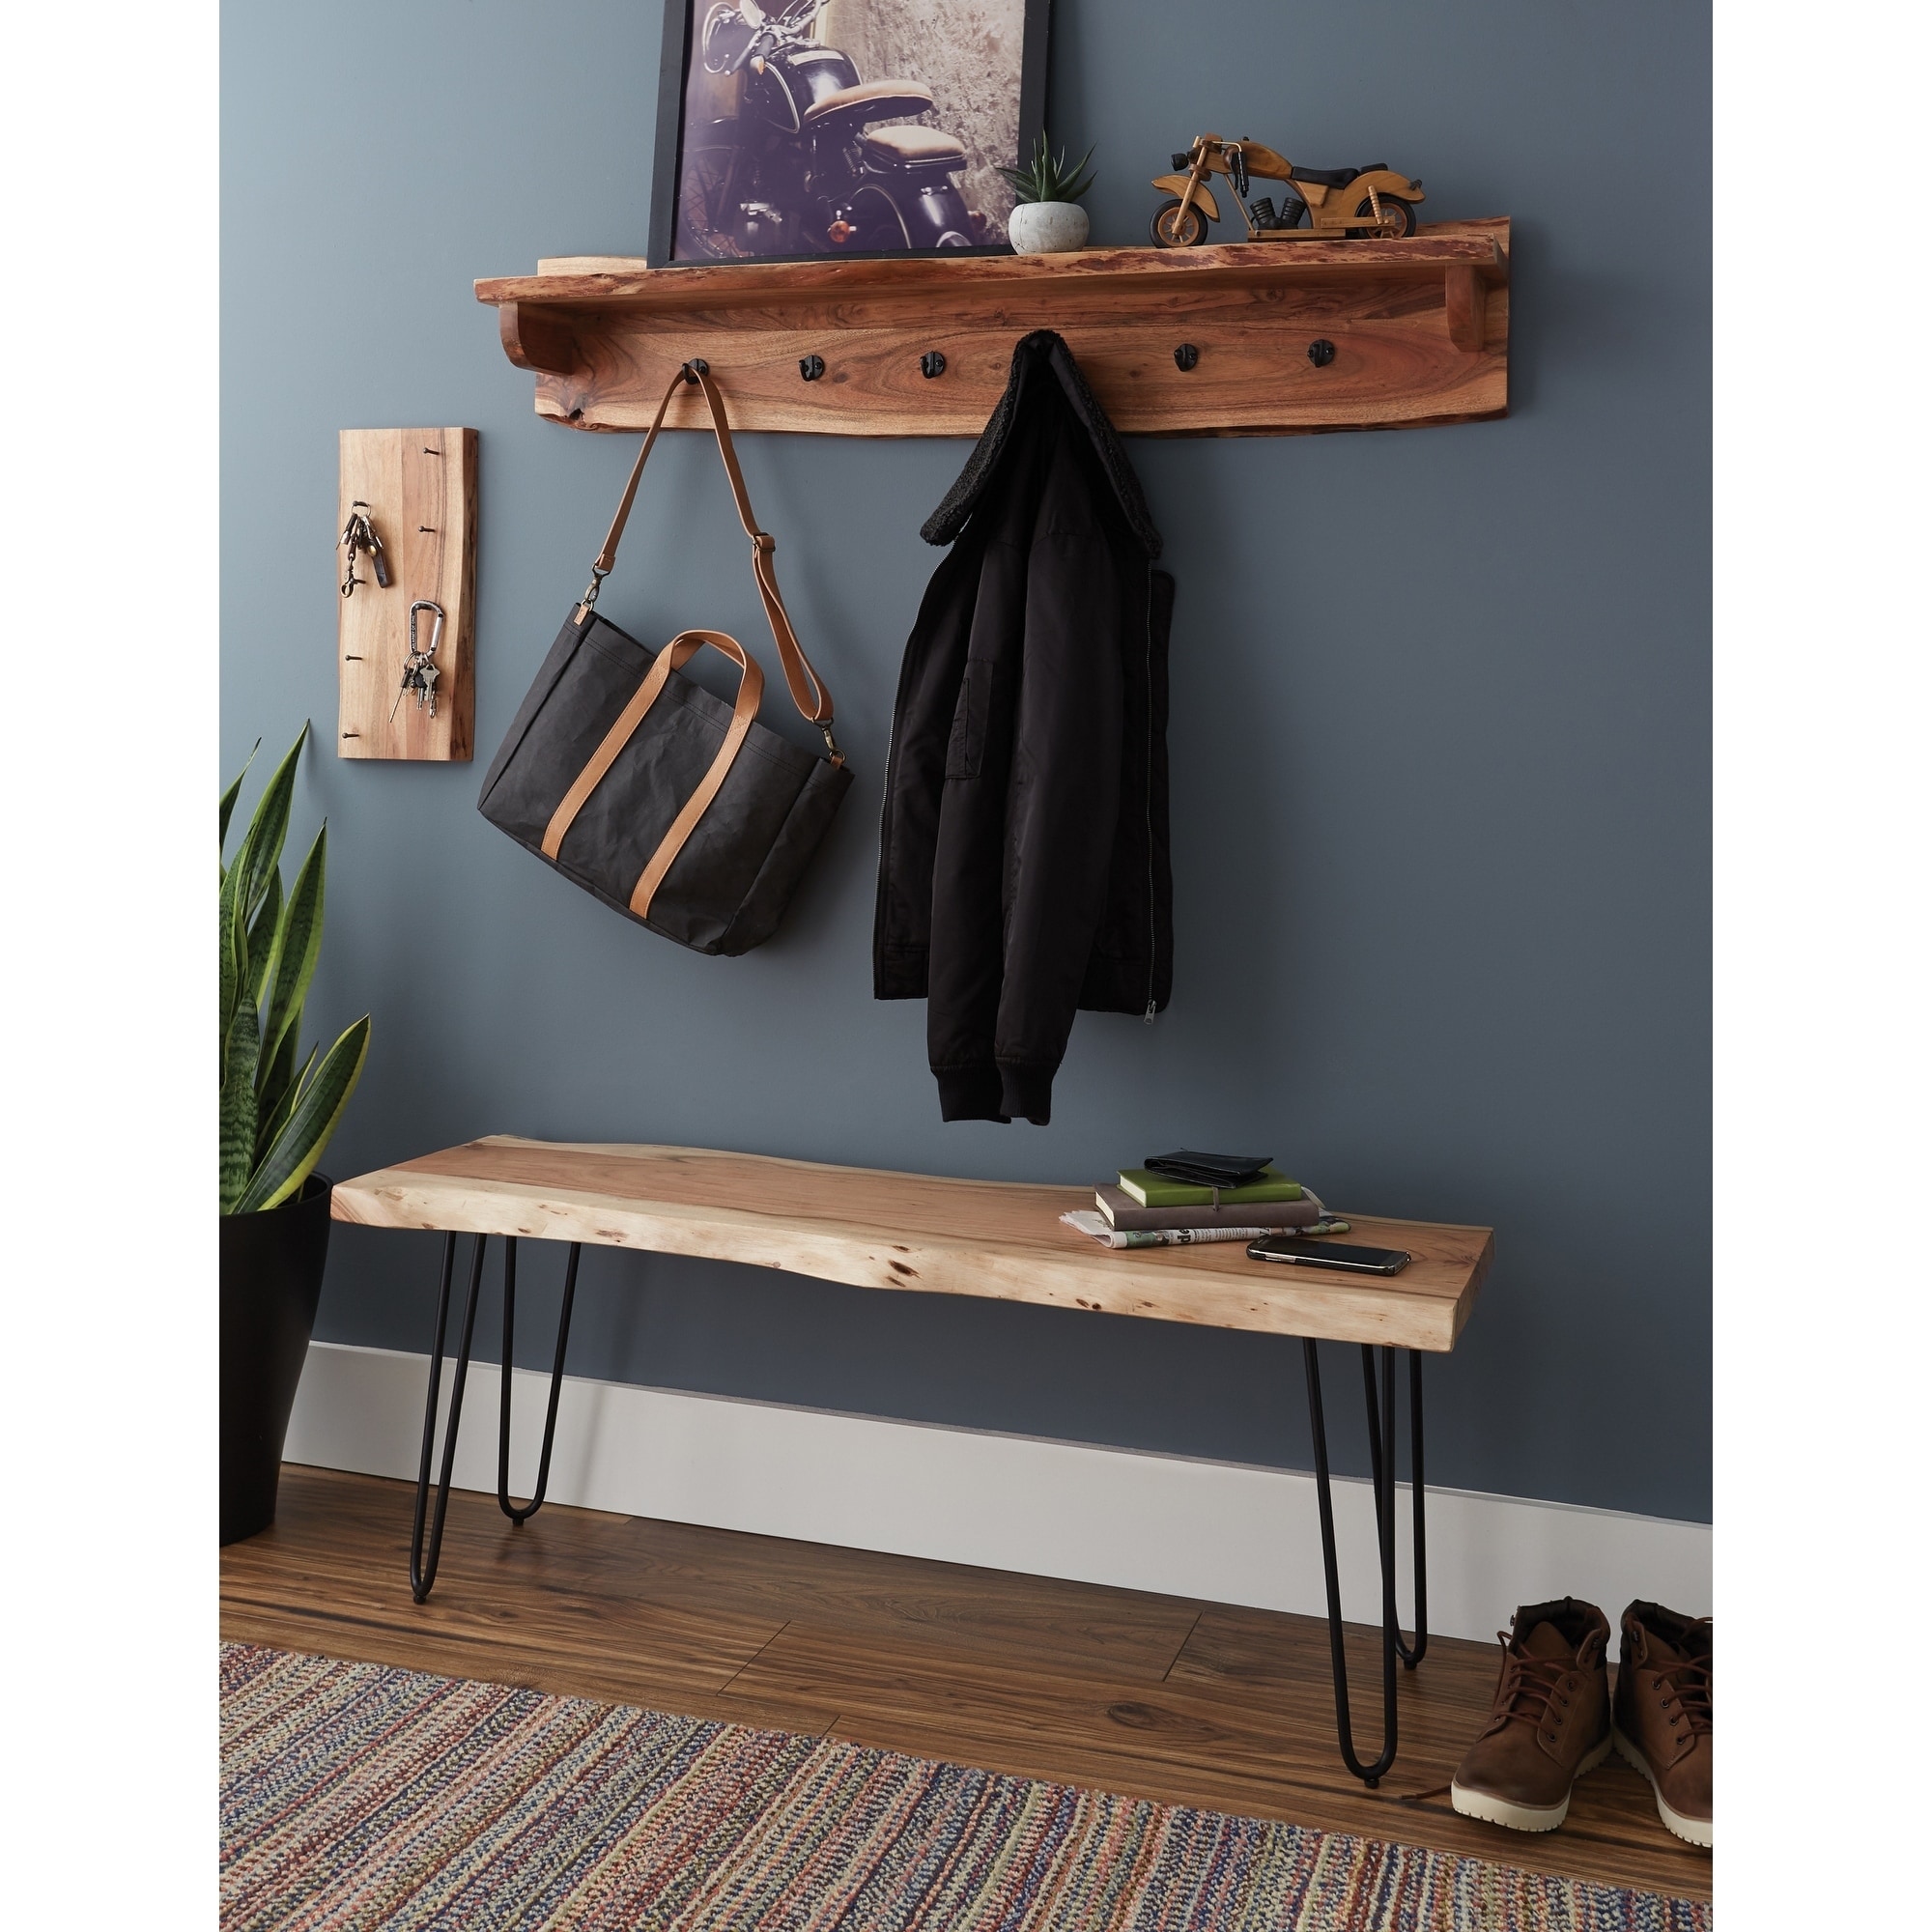 48 Ryegate Live Edge Wood Bench With Coat Hook Shelf Set Natural